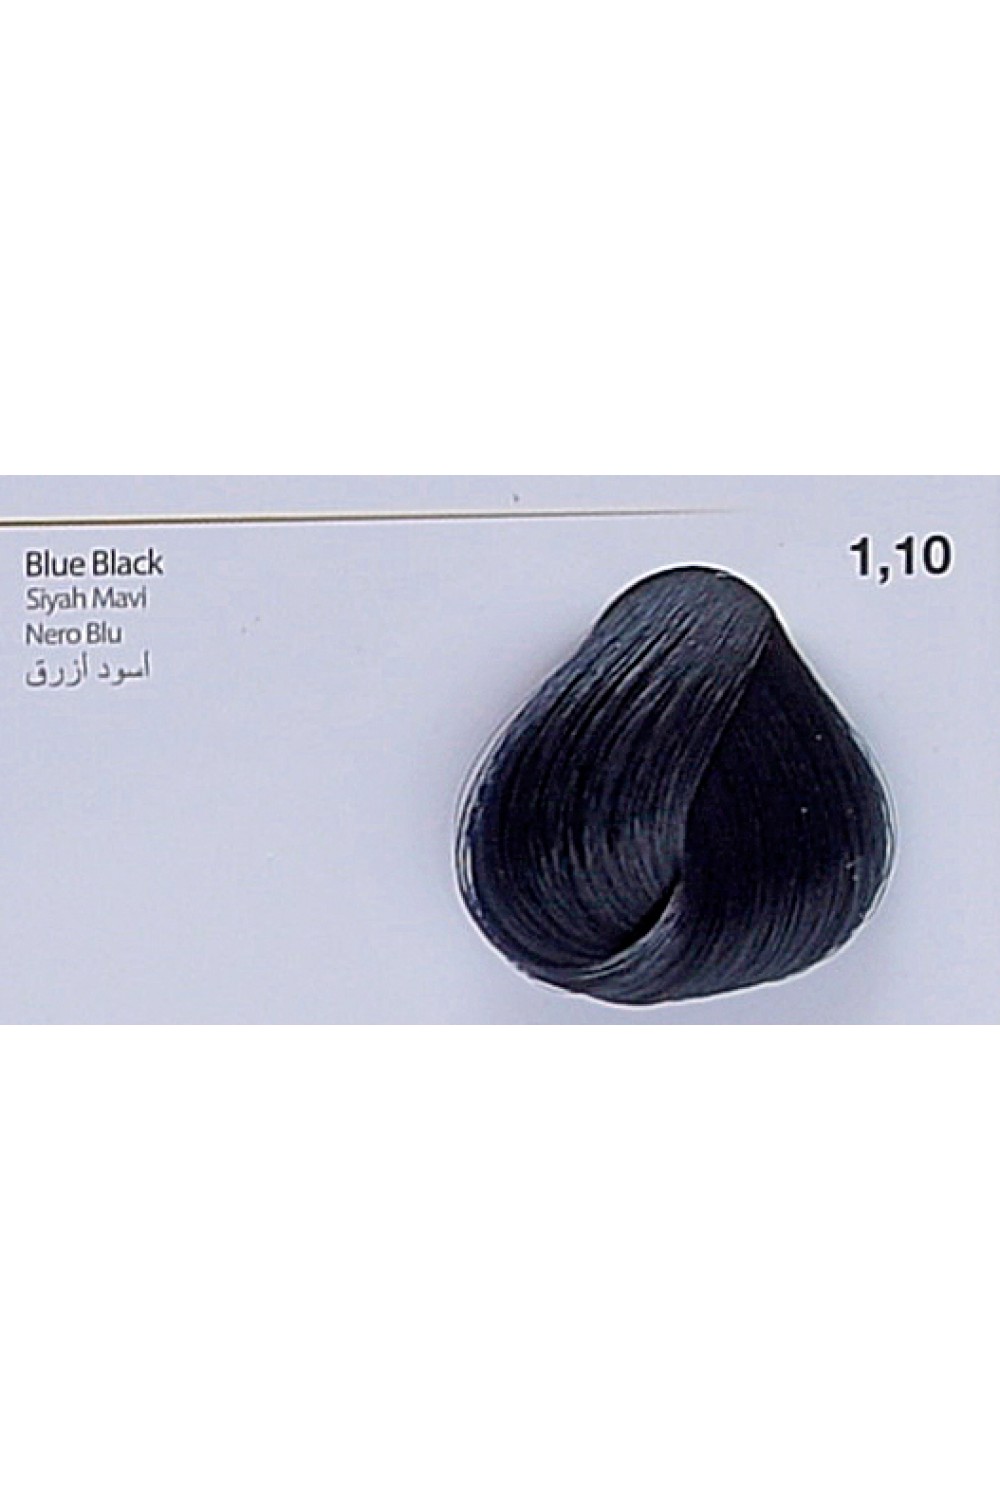 Ceris Professional - Blue Black